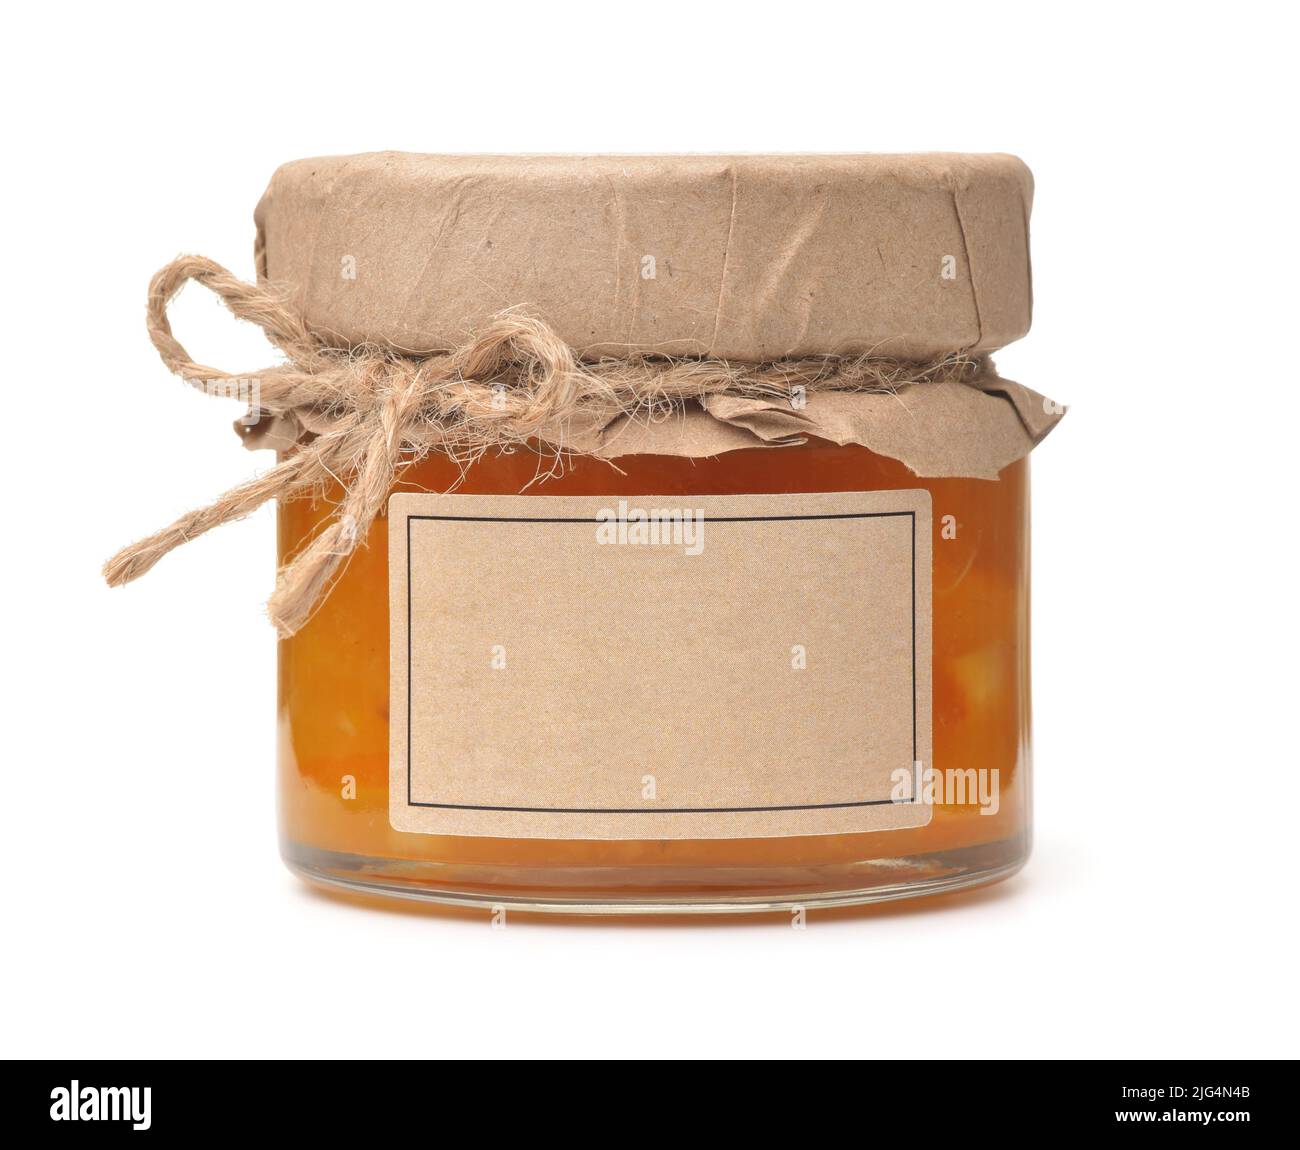 Vista frontal del tarro de mermelada naranja con etiqueta en blanco aislada sobre blanco Foto de stock